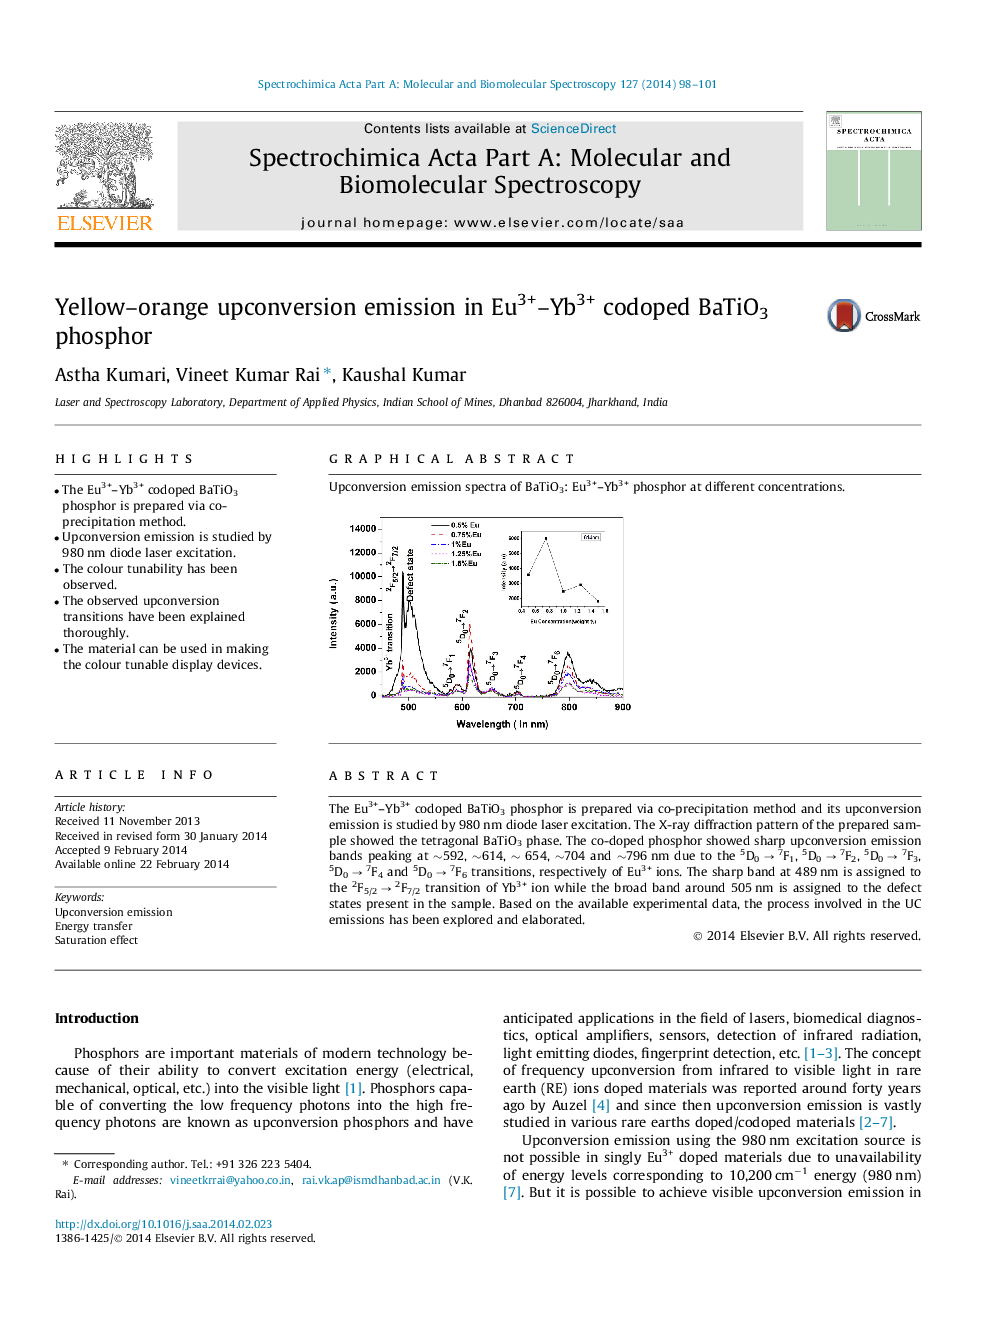 Yellow–orange upconversion emission in Eu3+–Yb3+ codoped BaTiO3 phosphor